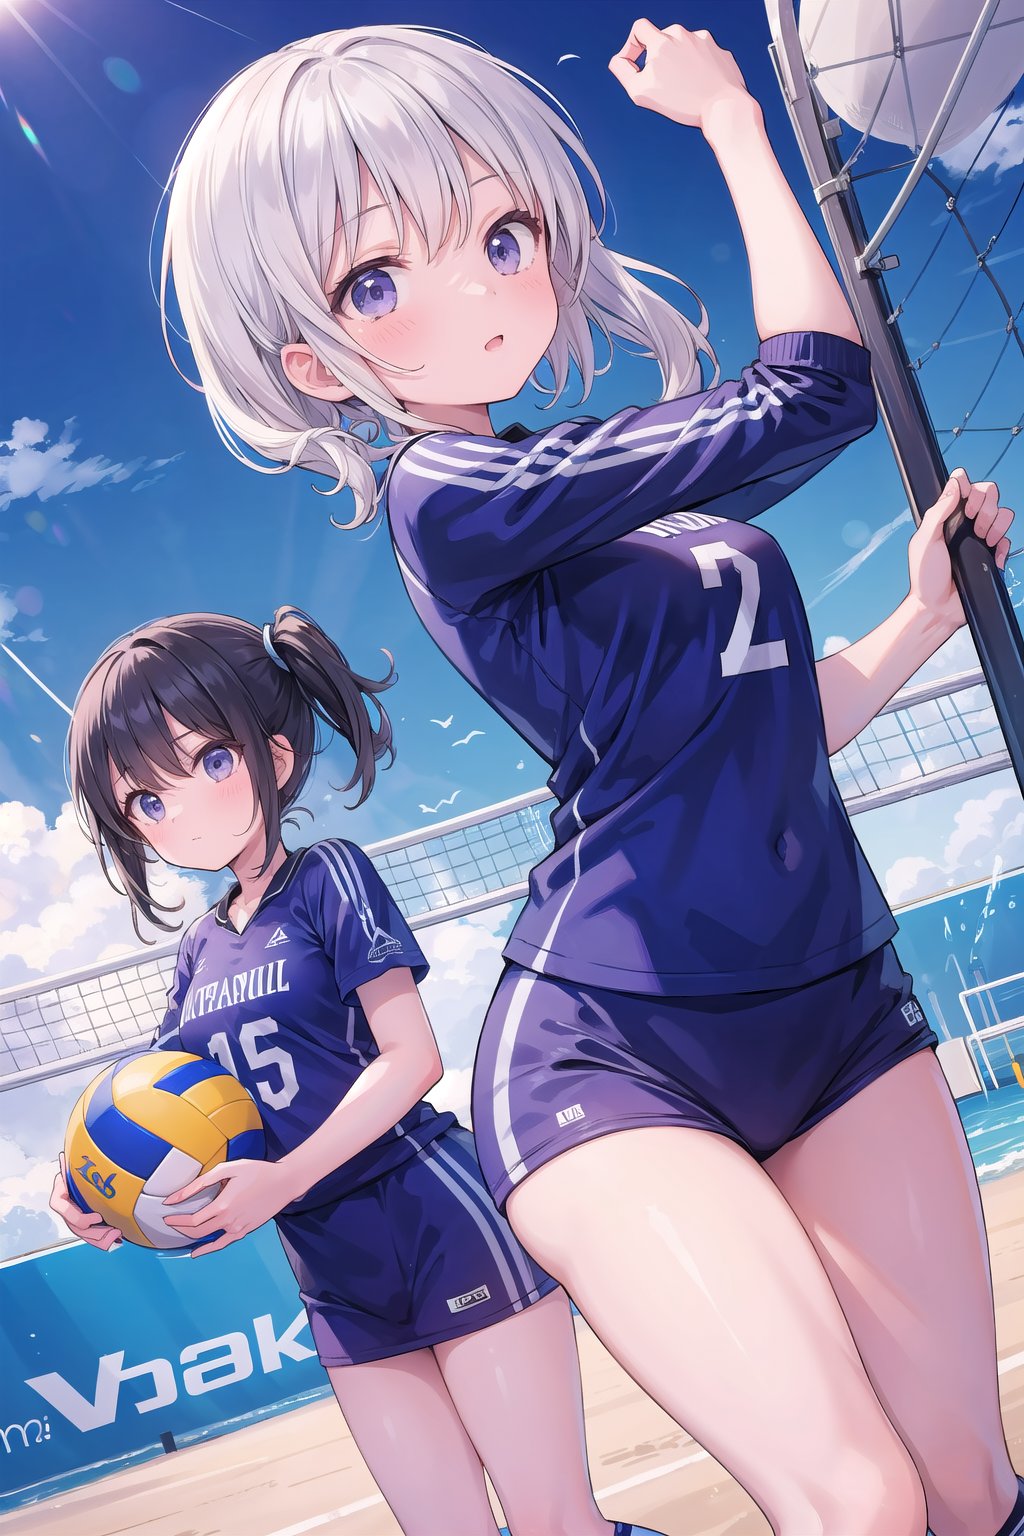 (masterpiece), (2girls), volleyball uniform, dynamic angle